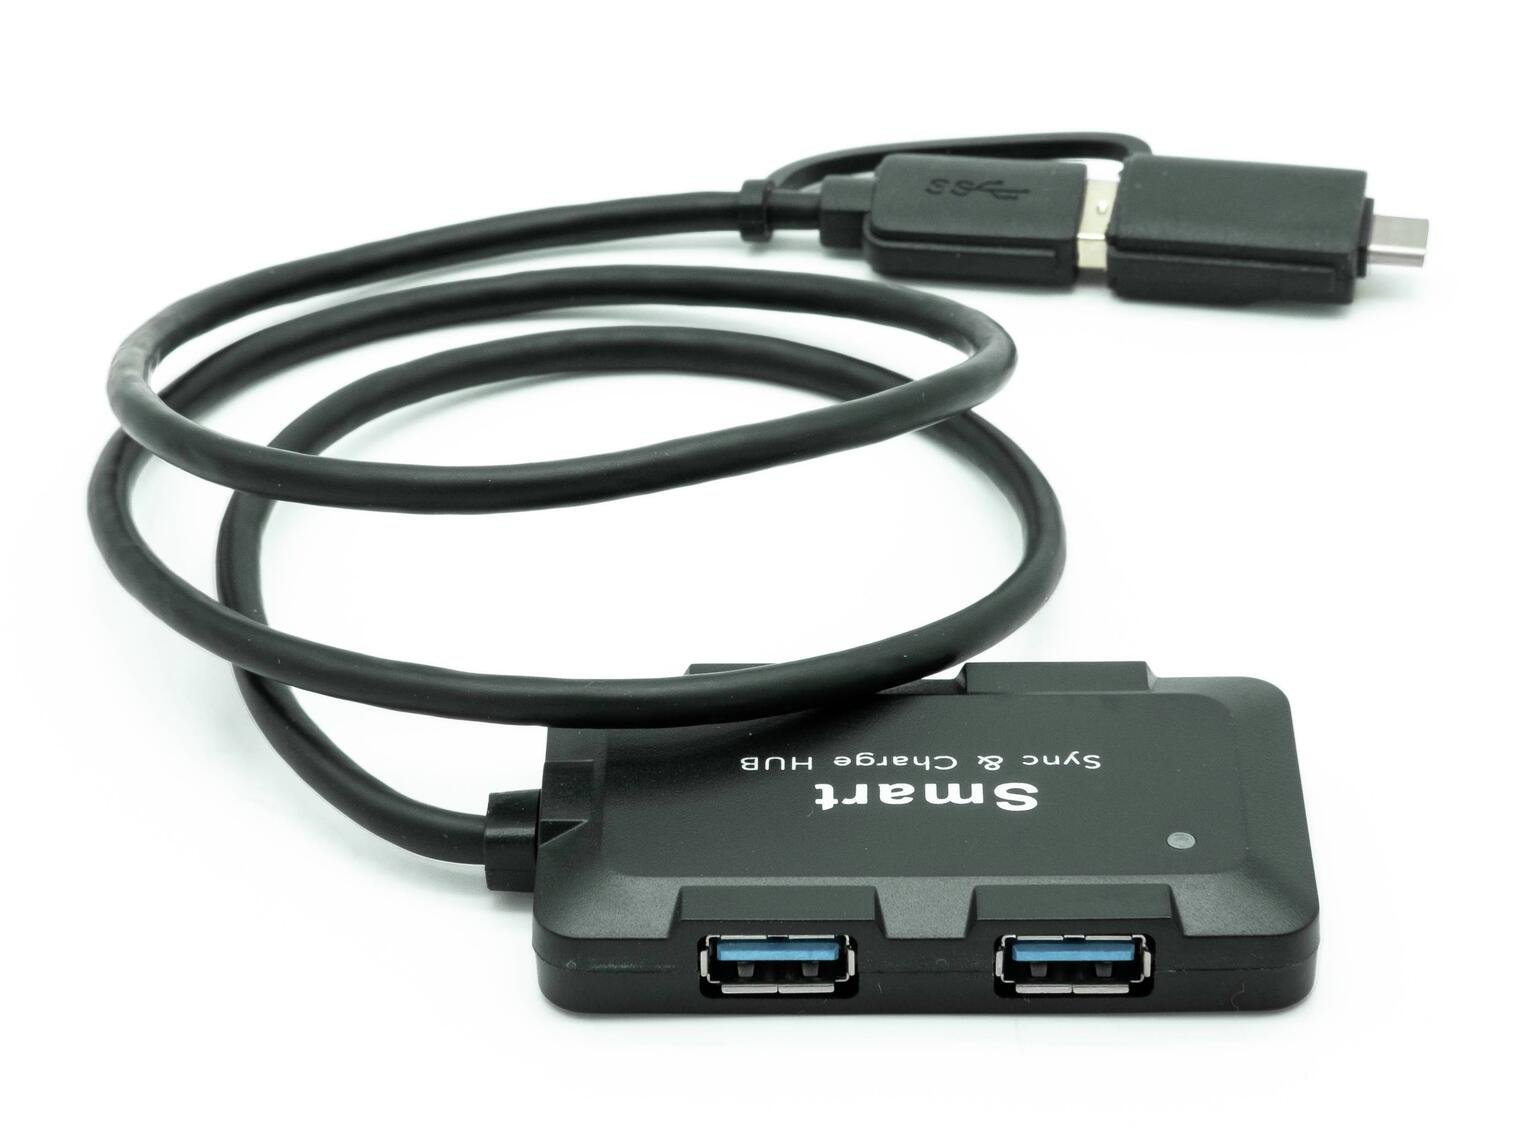 Dynamode USB-C 4 Port USB3 Hub Review